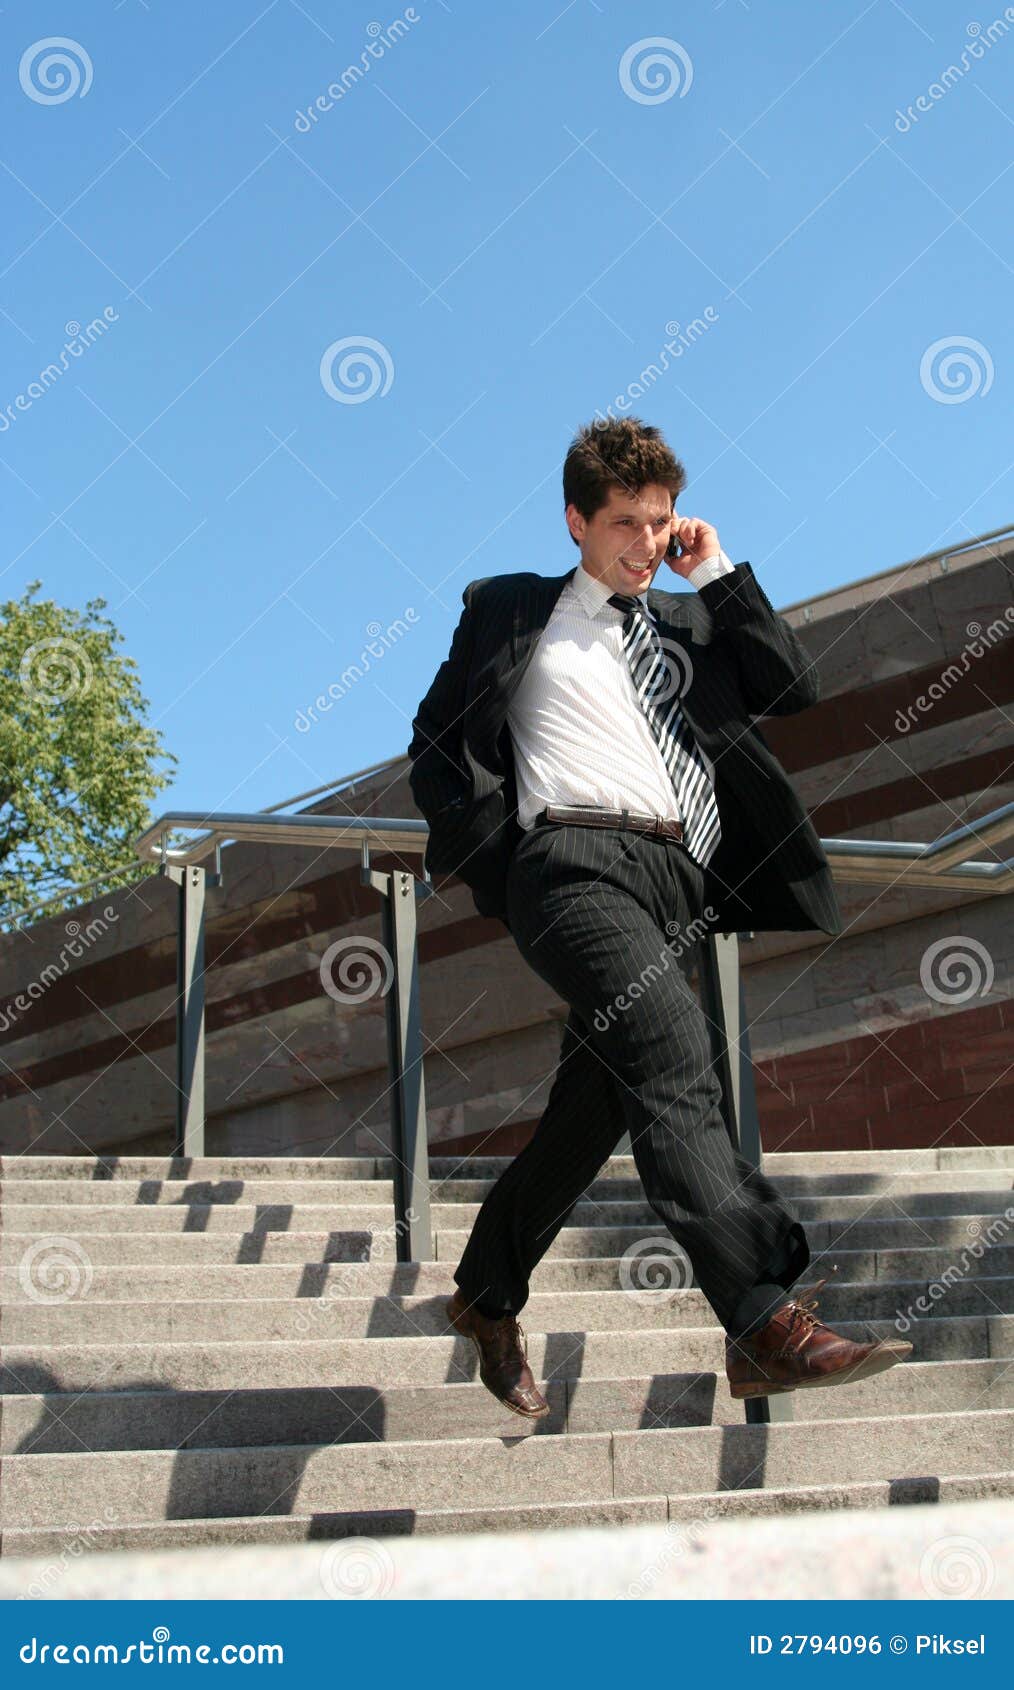 Man Walking Down The Stairs Royalty Free Stock Image - Image: 2794096